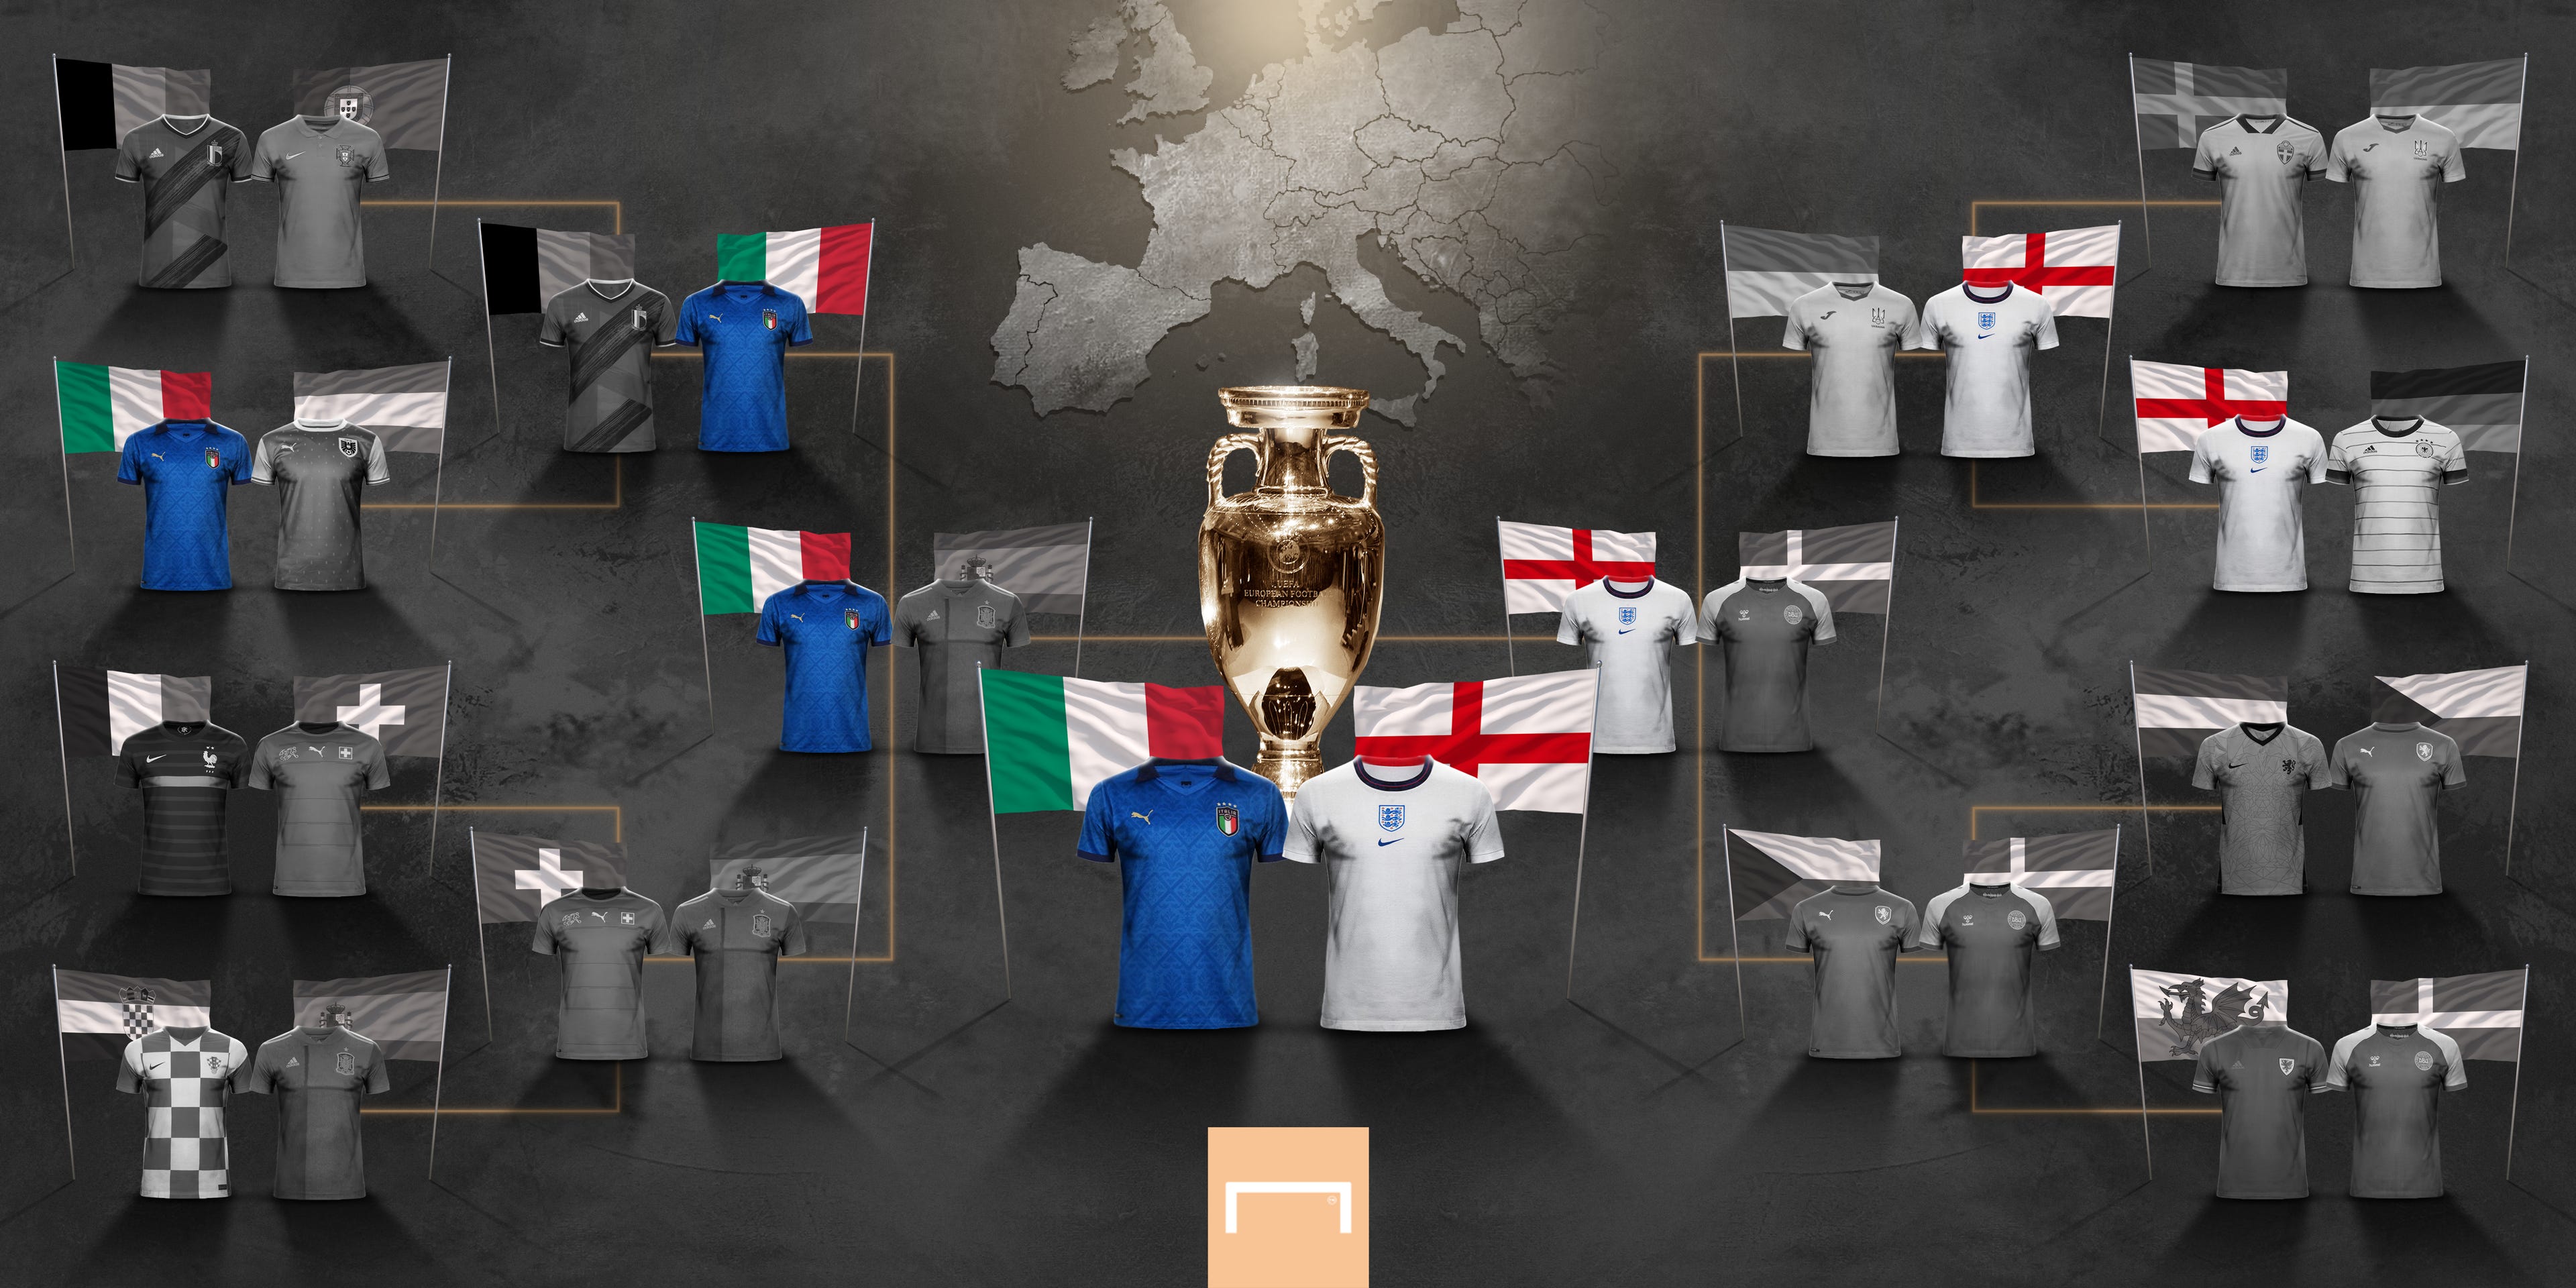 Piala euro 2021 jadwal